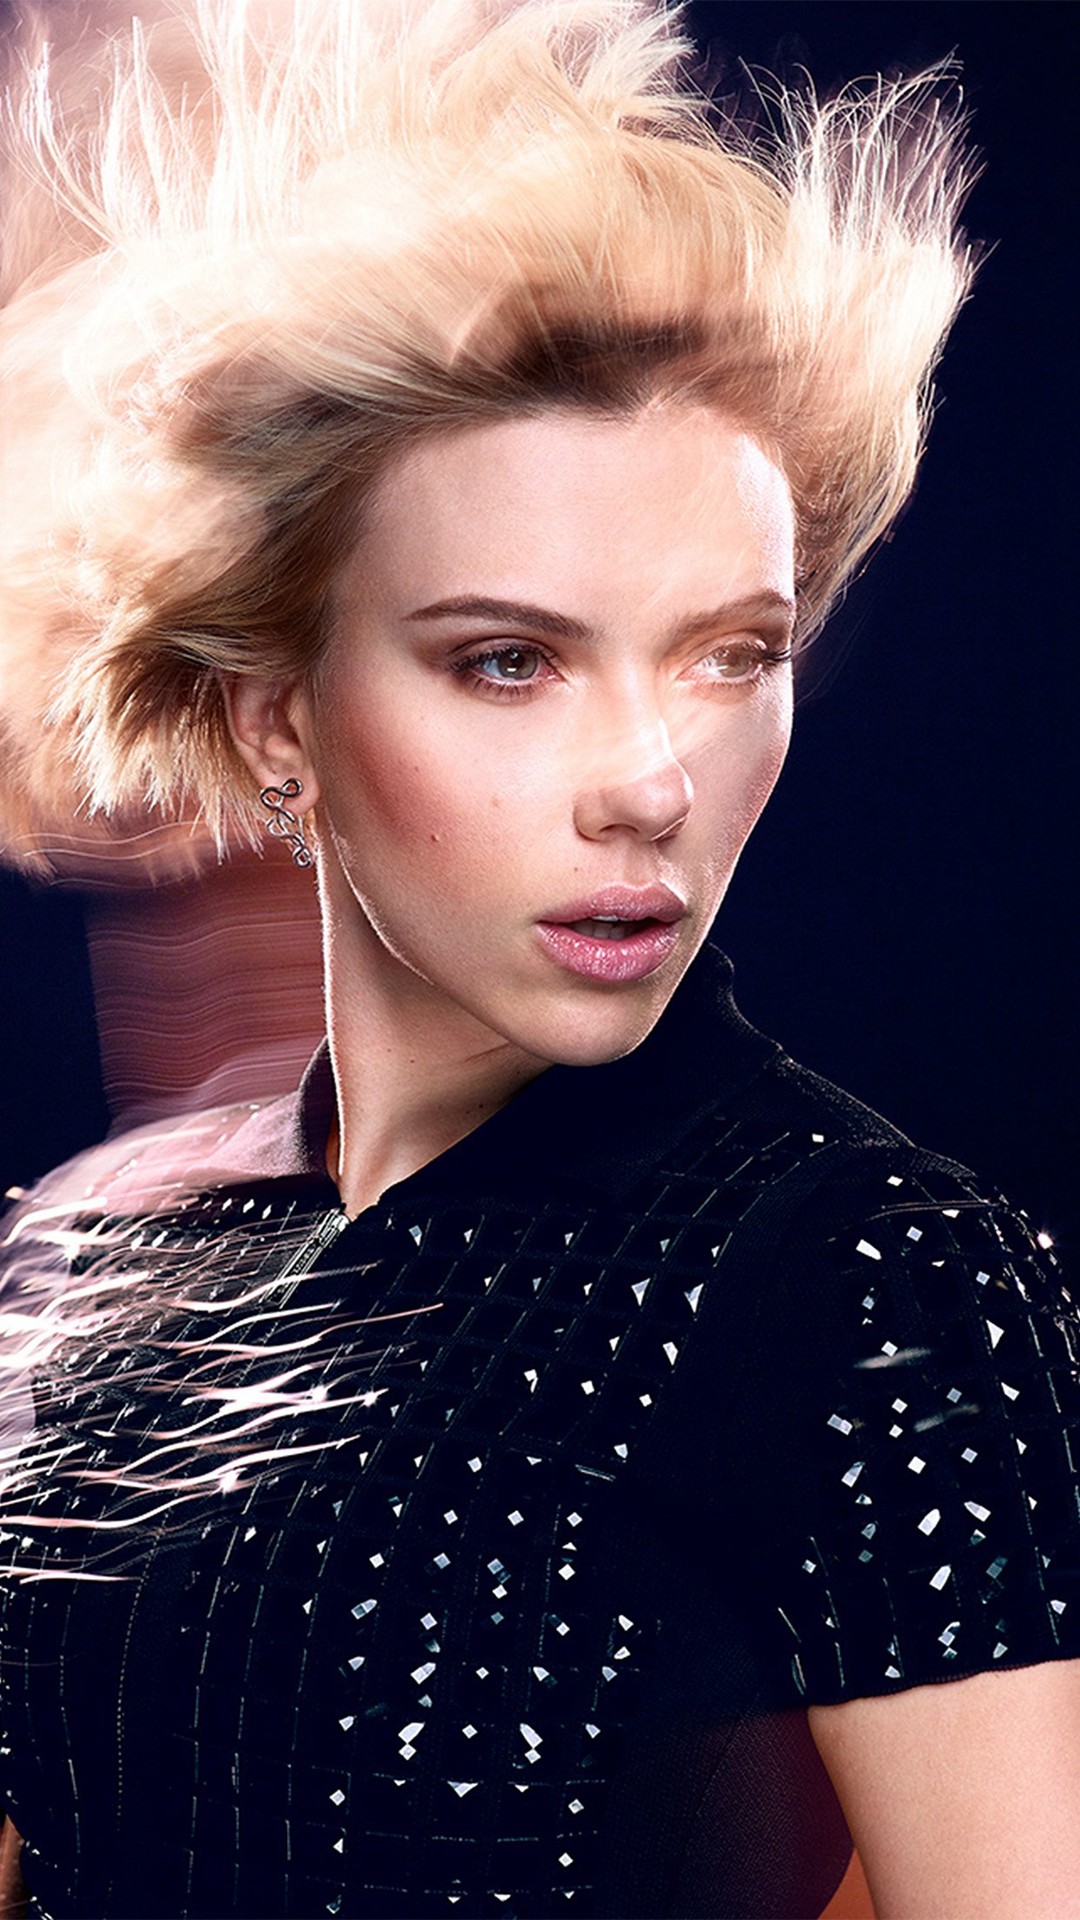 1080x1920 ... Scarlett Johansson Actress Celebrity Model Photoshoot iPhone 8 wallpaper .